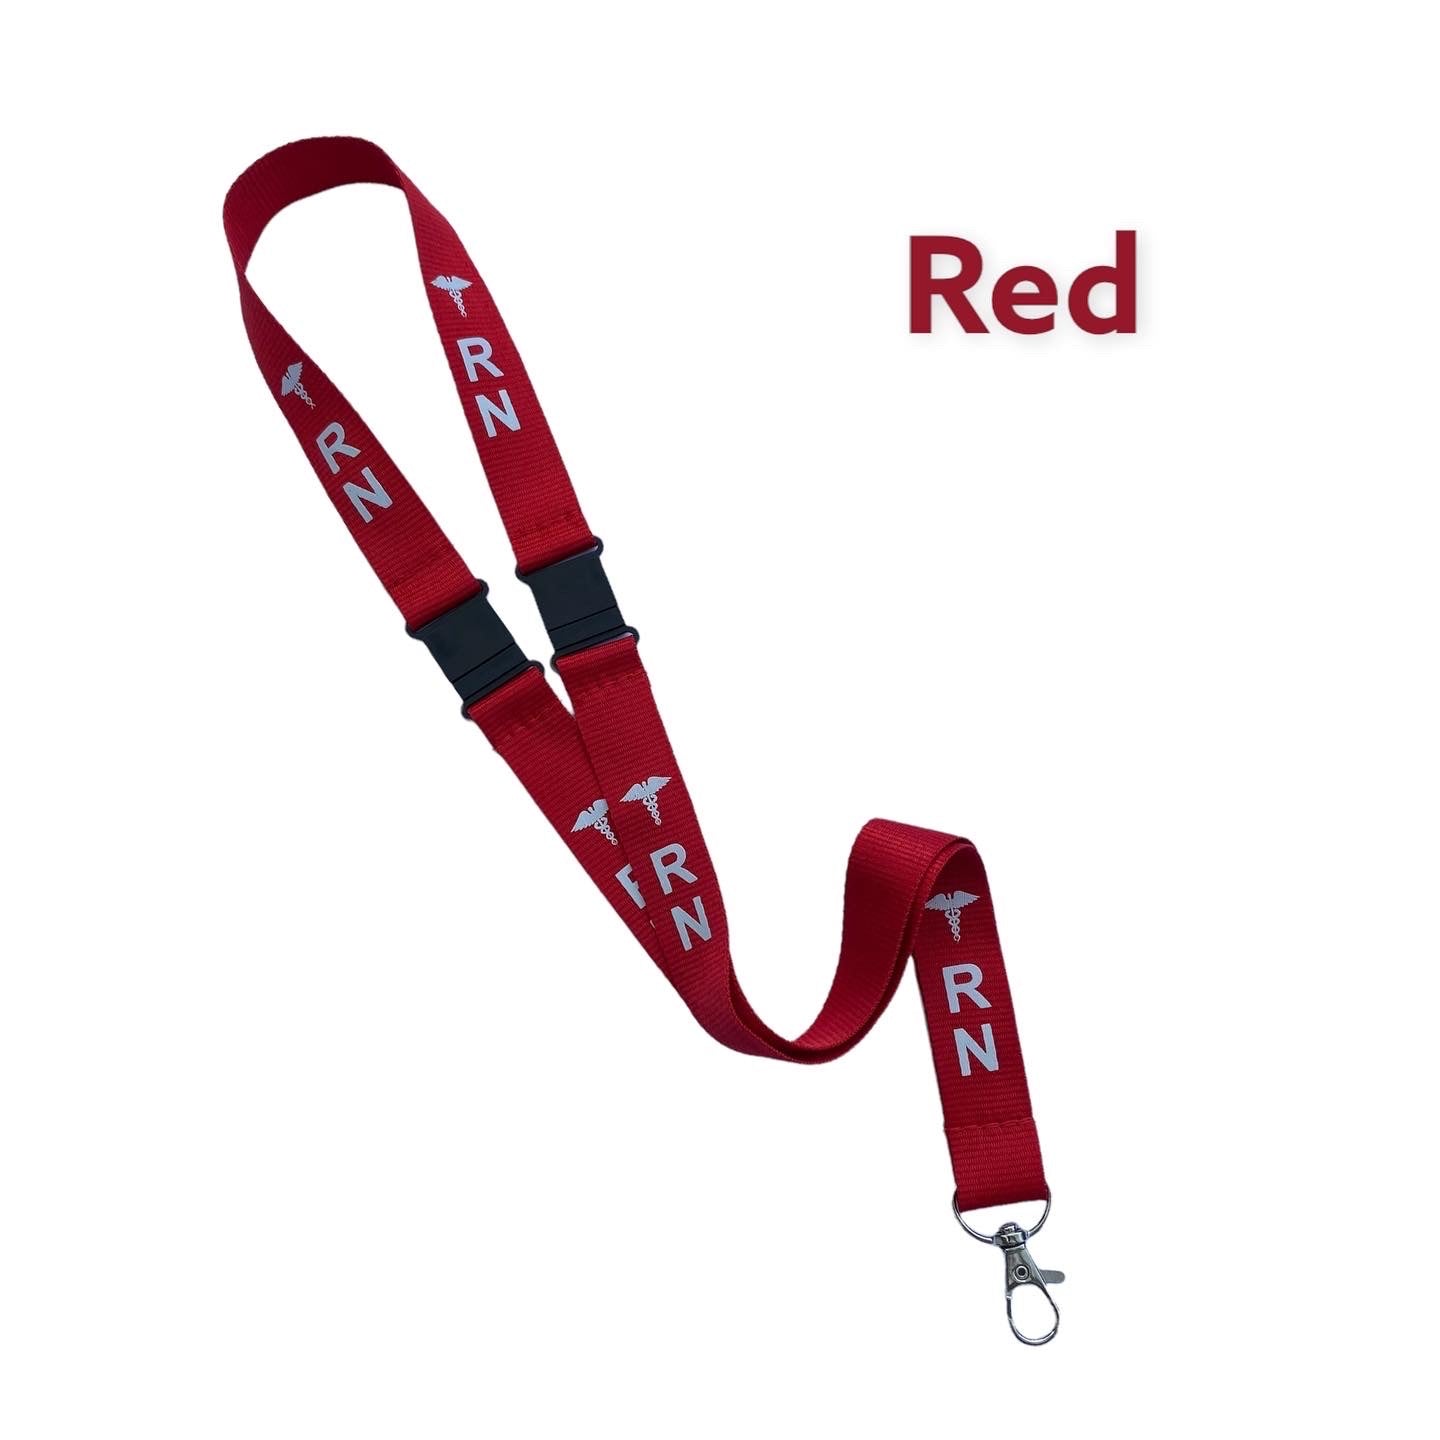 RED RN LANYARD, Badge holder/key holder with 2 breakaways, Nurse